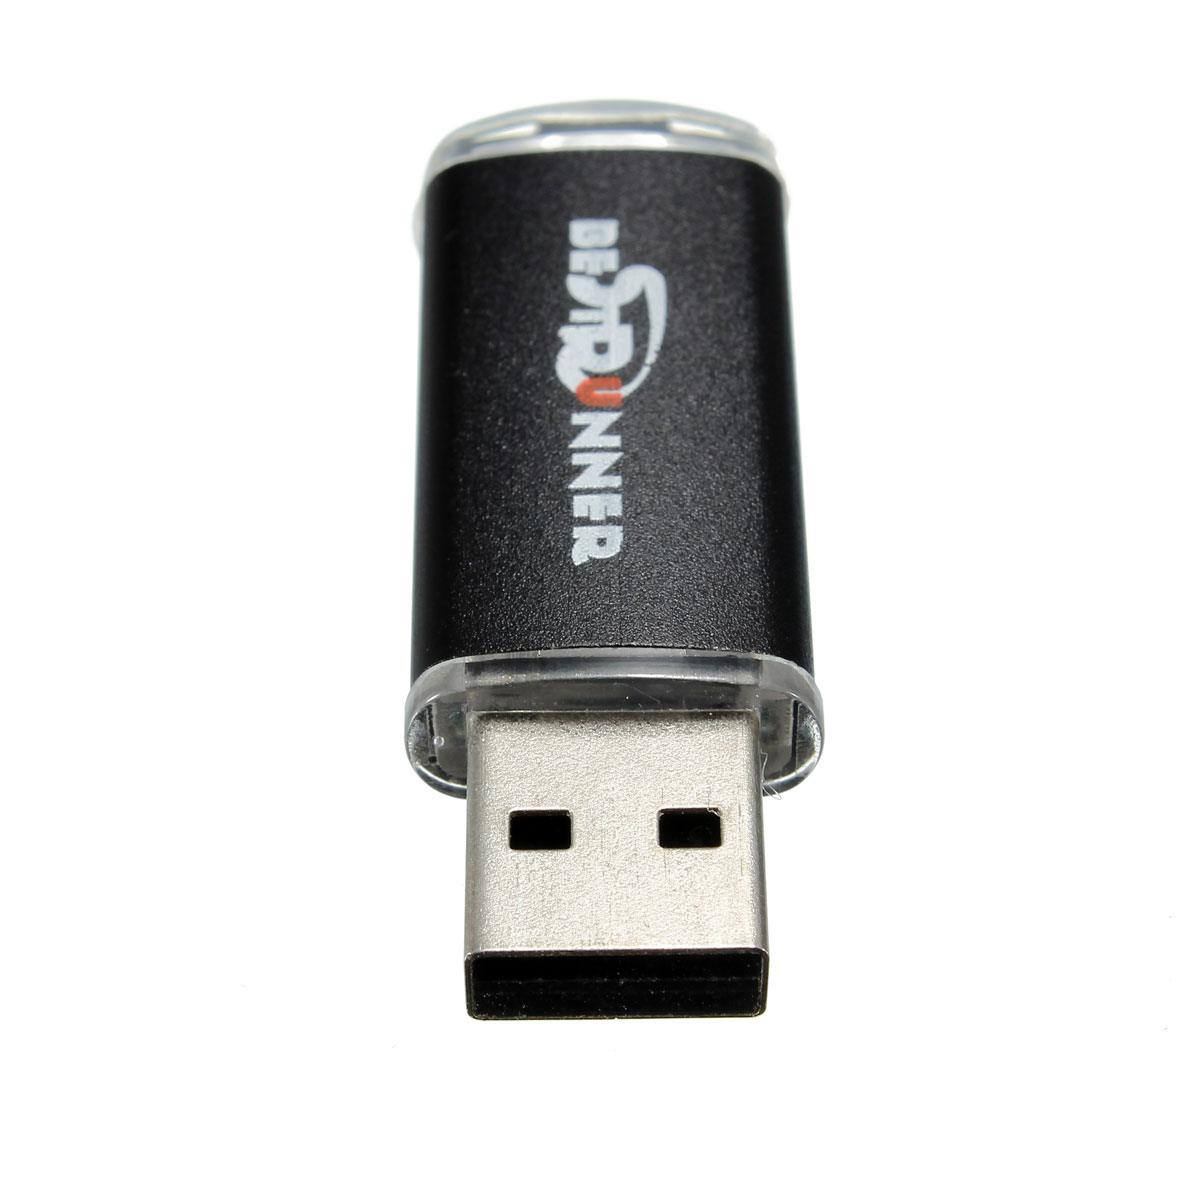 Bestrunner-Multi-Color-Portable-USB-20-1GB960M-Pendrive-USB-Disk-for-Macbook-Laptop-PC-1723018-7